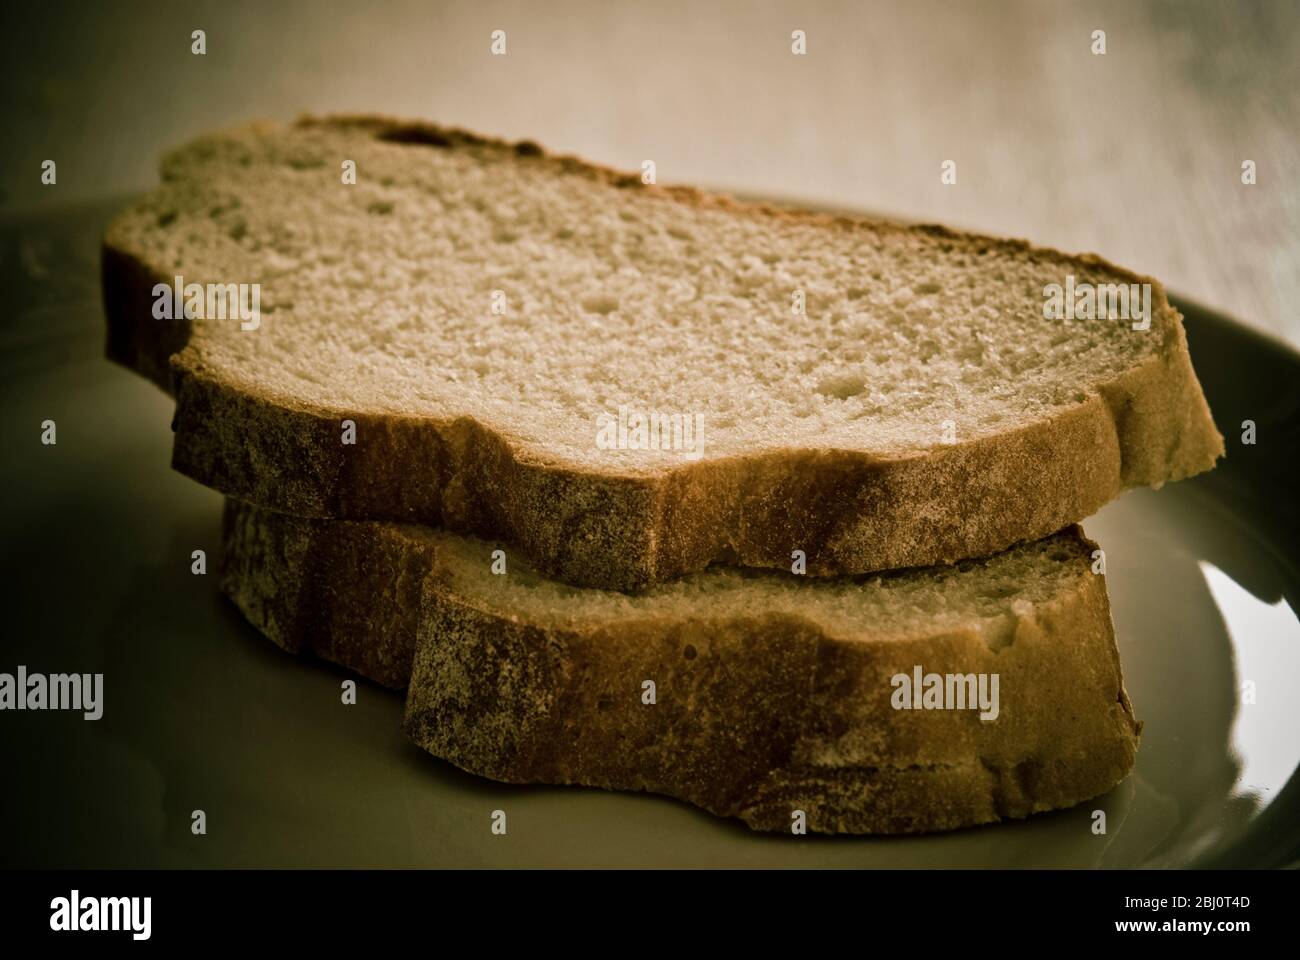 Zwei unebene Scheiben rustikales Brot - Stockfoto